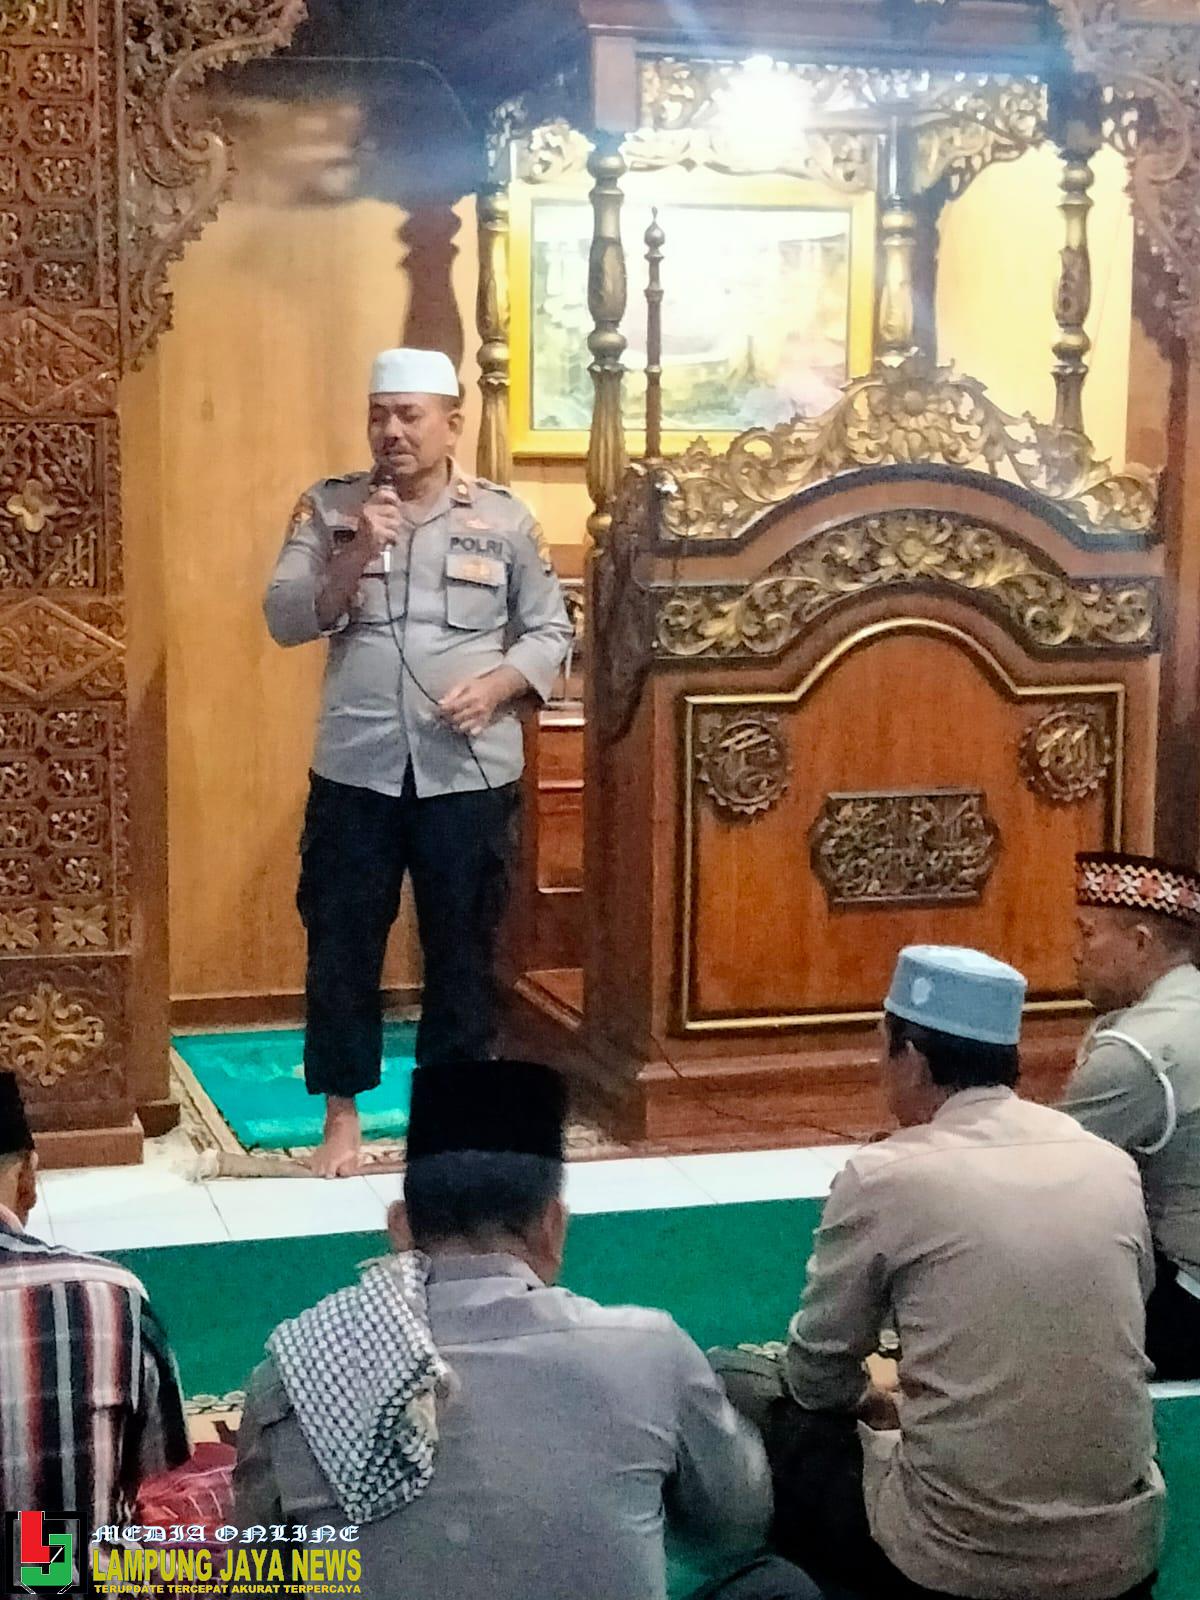 Jumat Curhat, Kabagops Polres Lampung Barat Sampaikan Pesan Kamtibmas Kepada Masyarakat